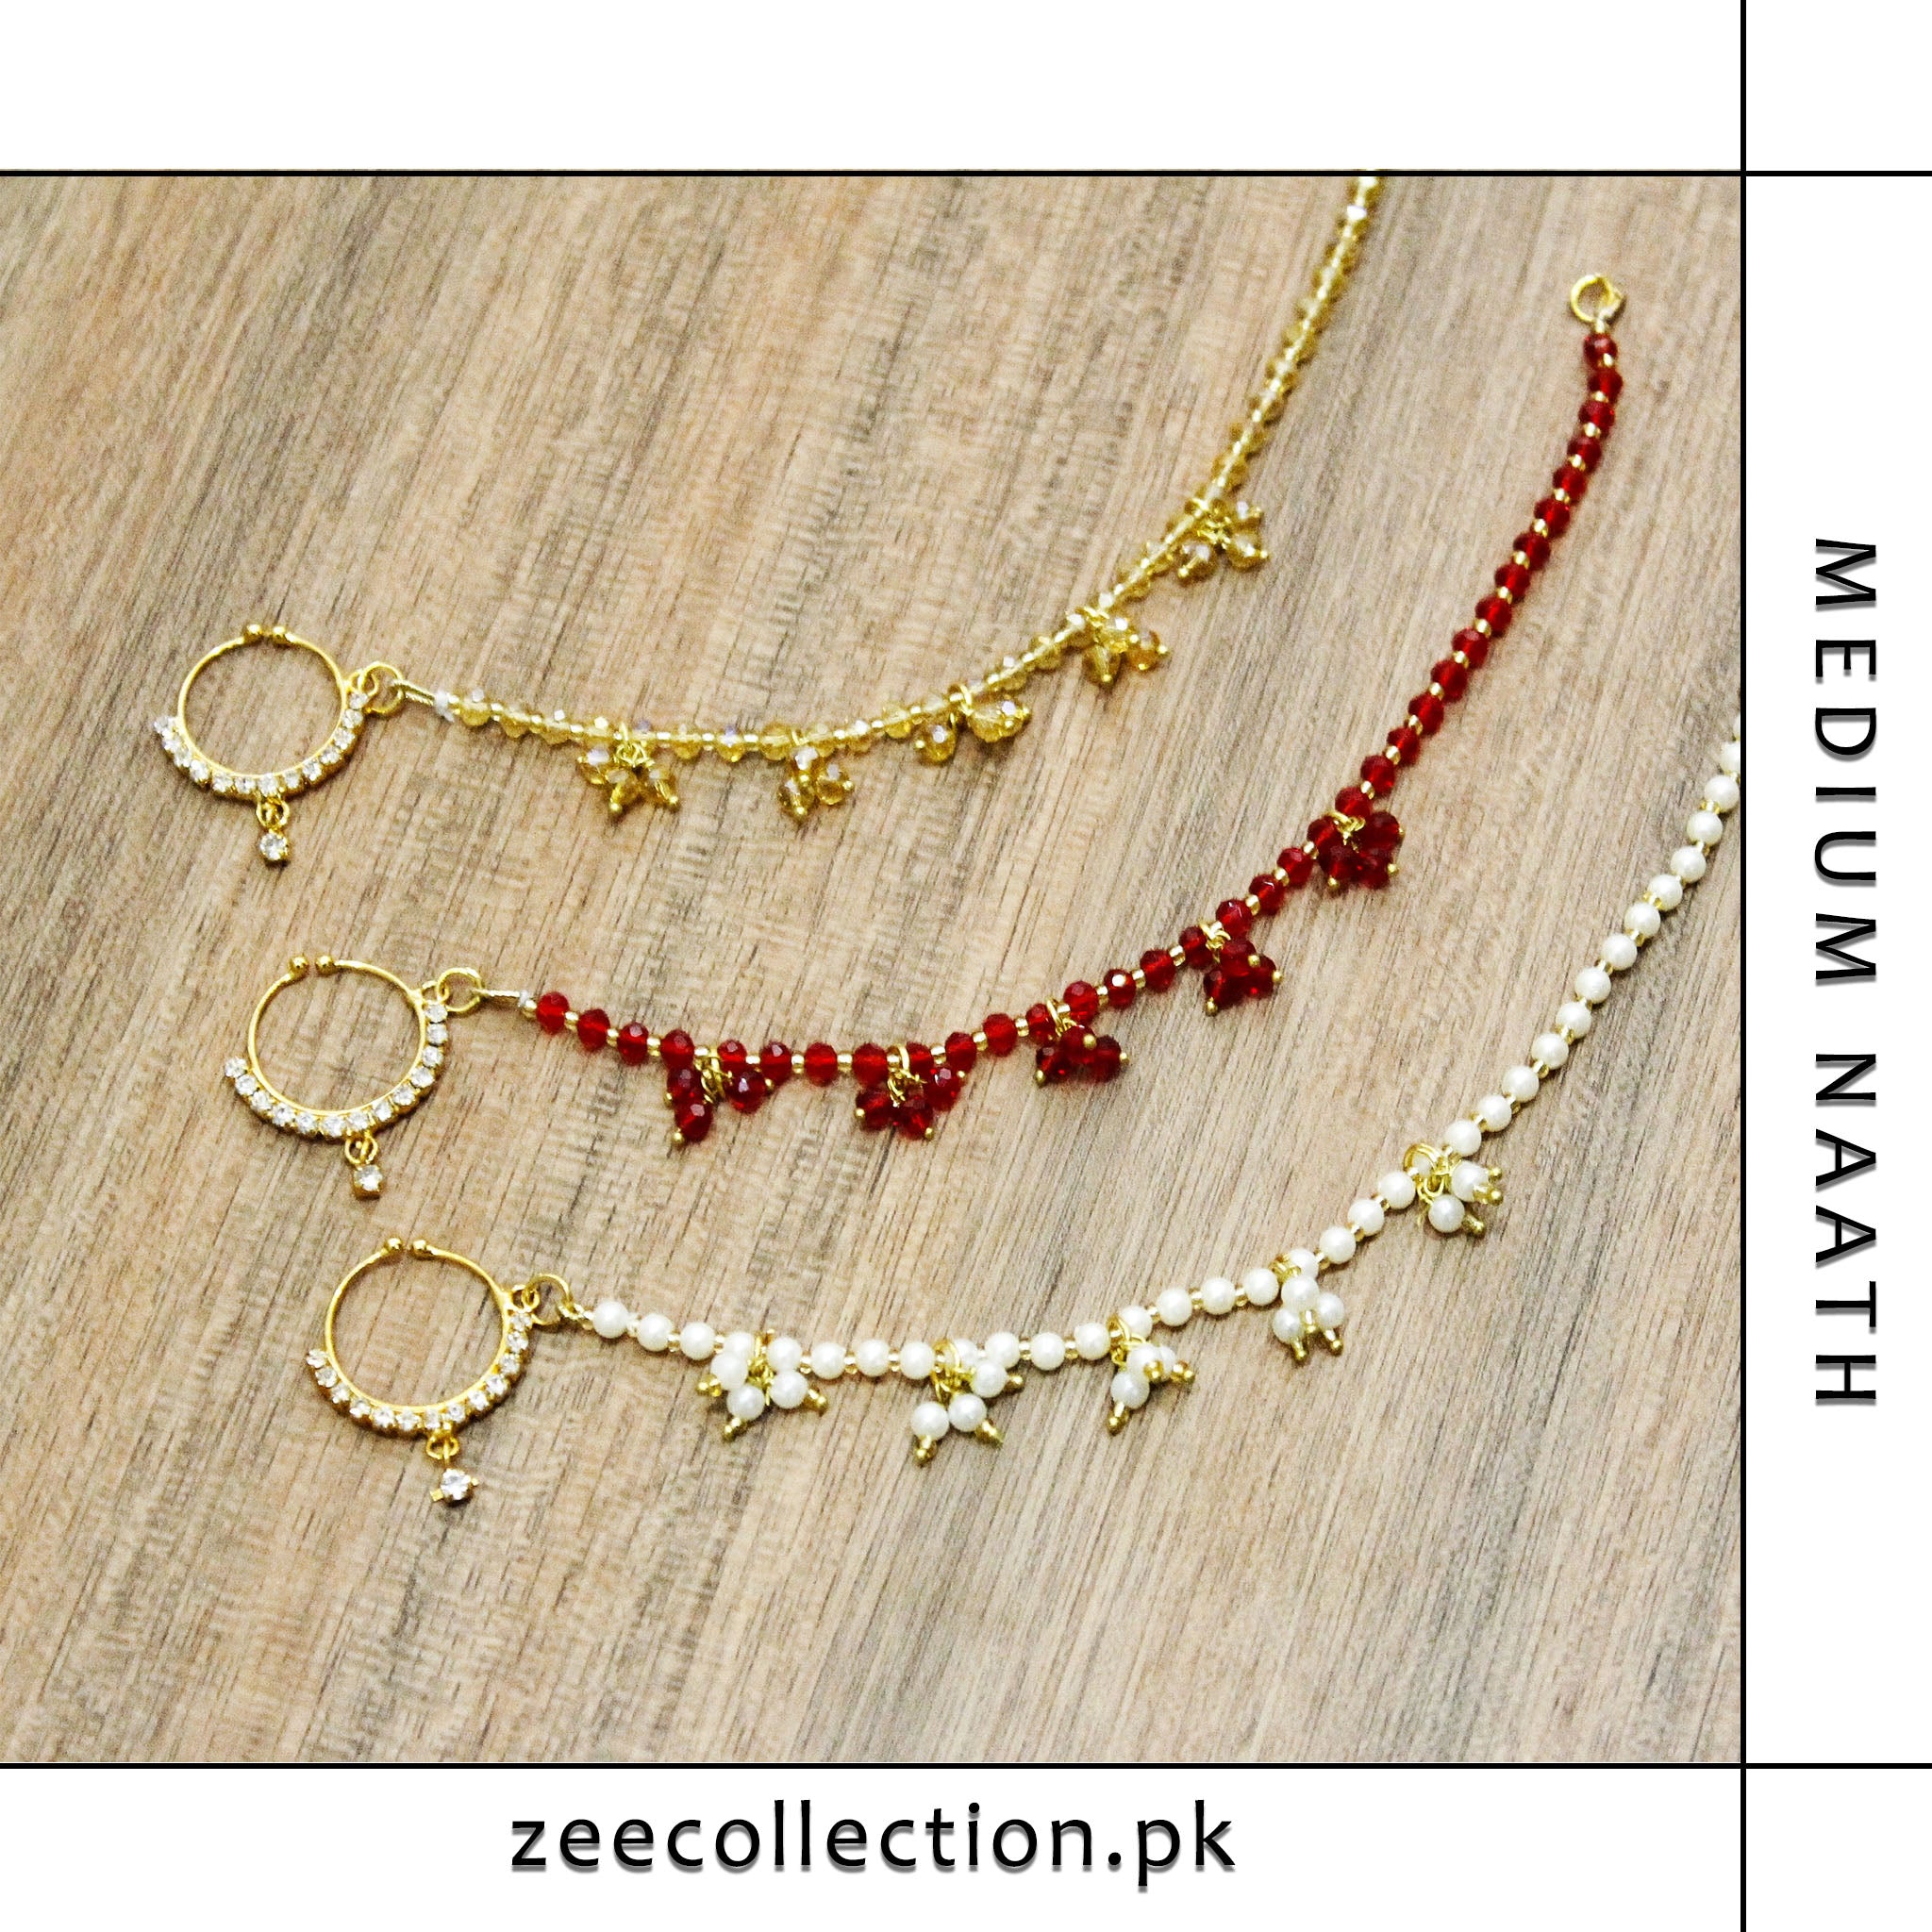 Medium Size Naath - Zee Collection pk